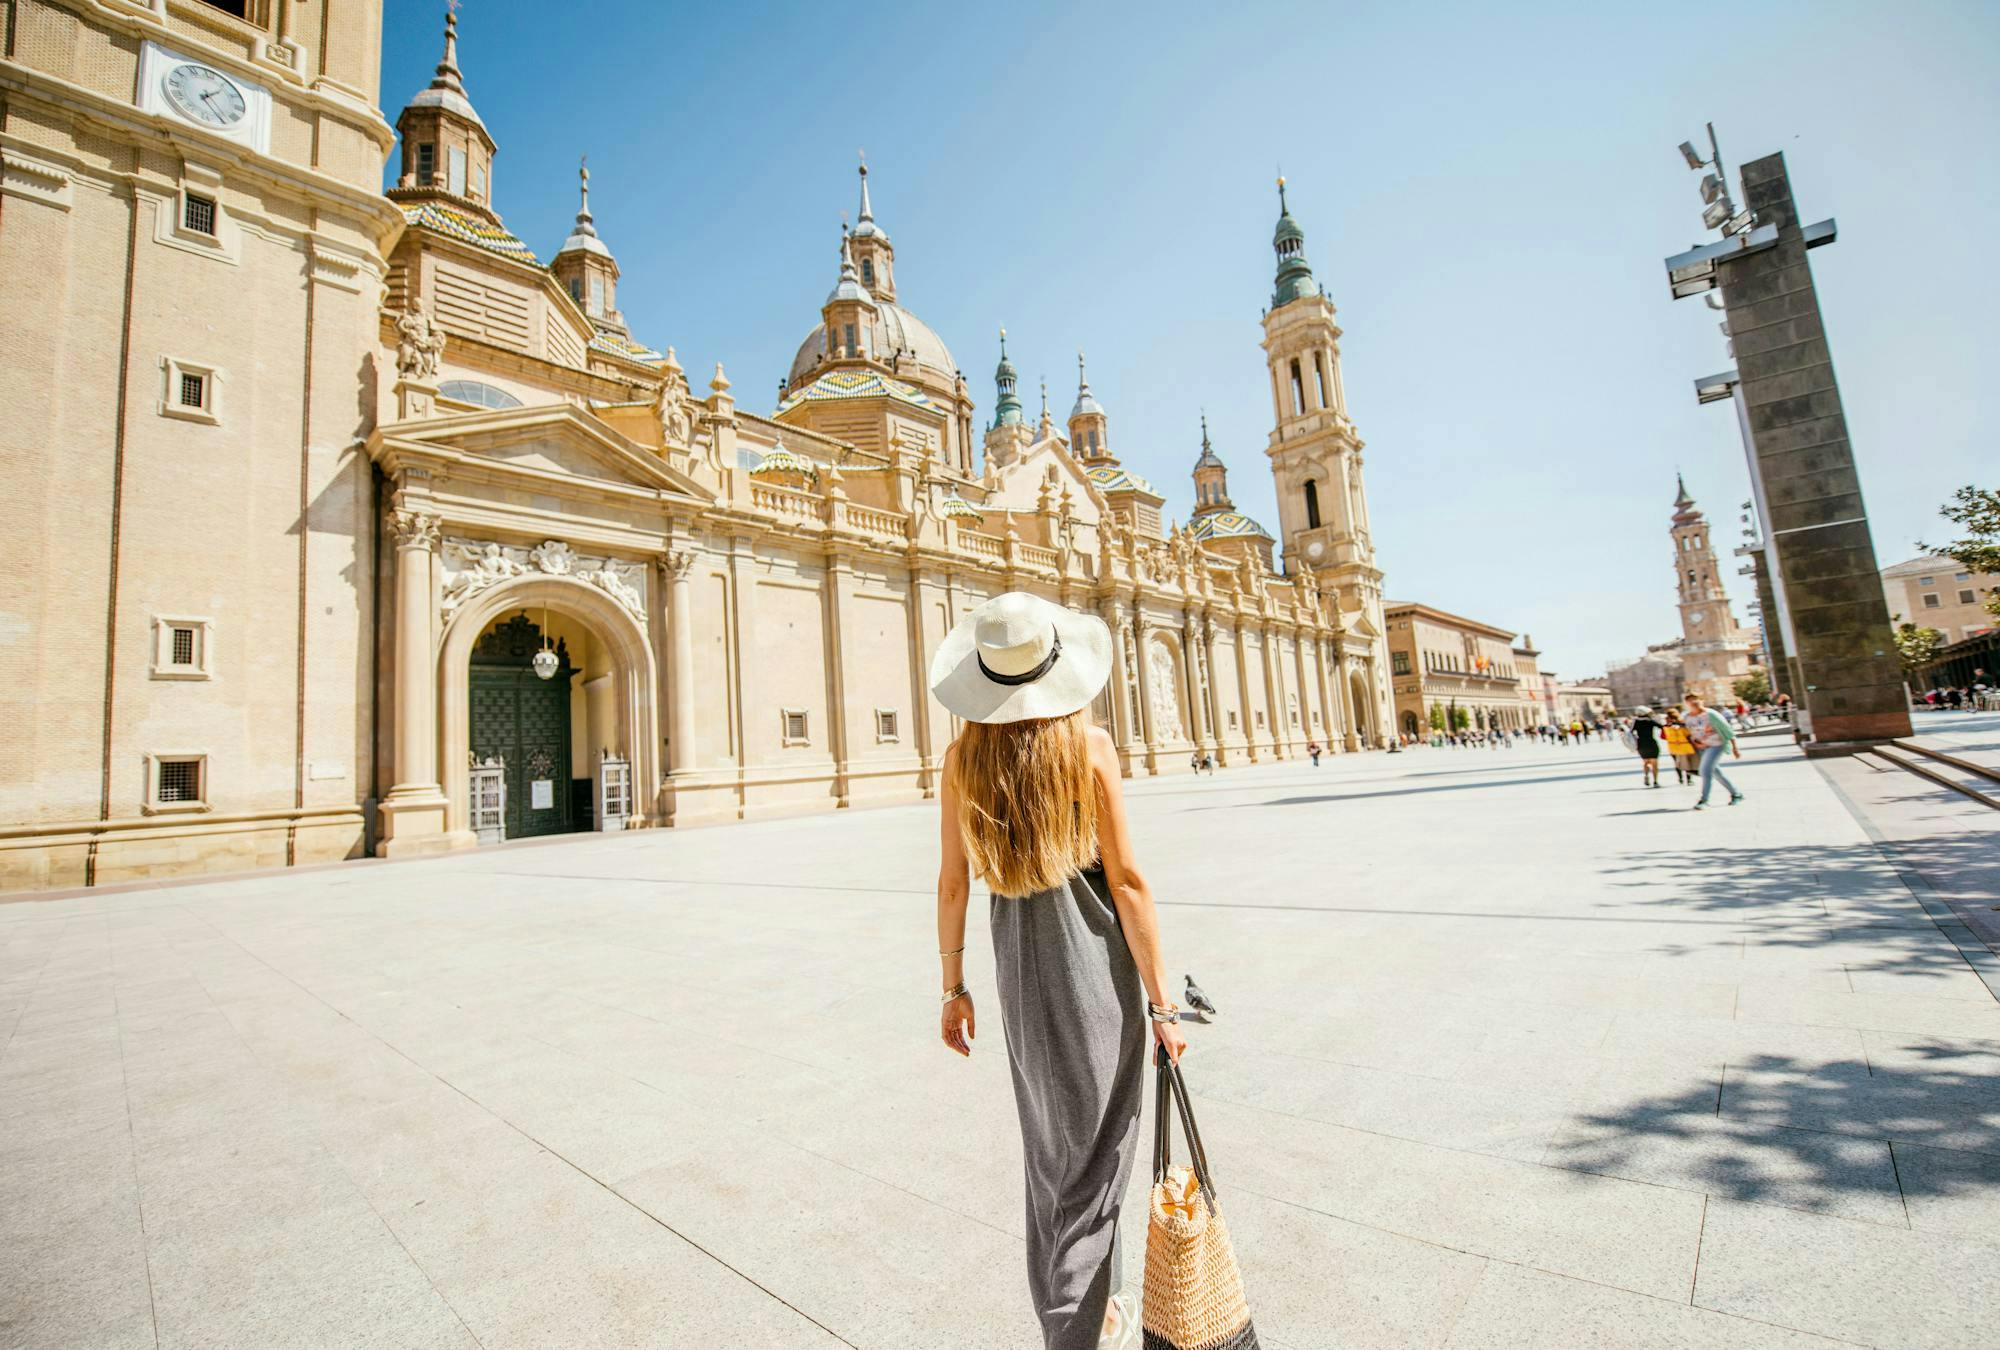 Woman walking through a town square in Spain